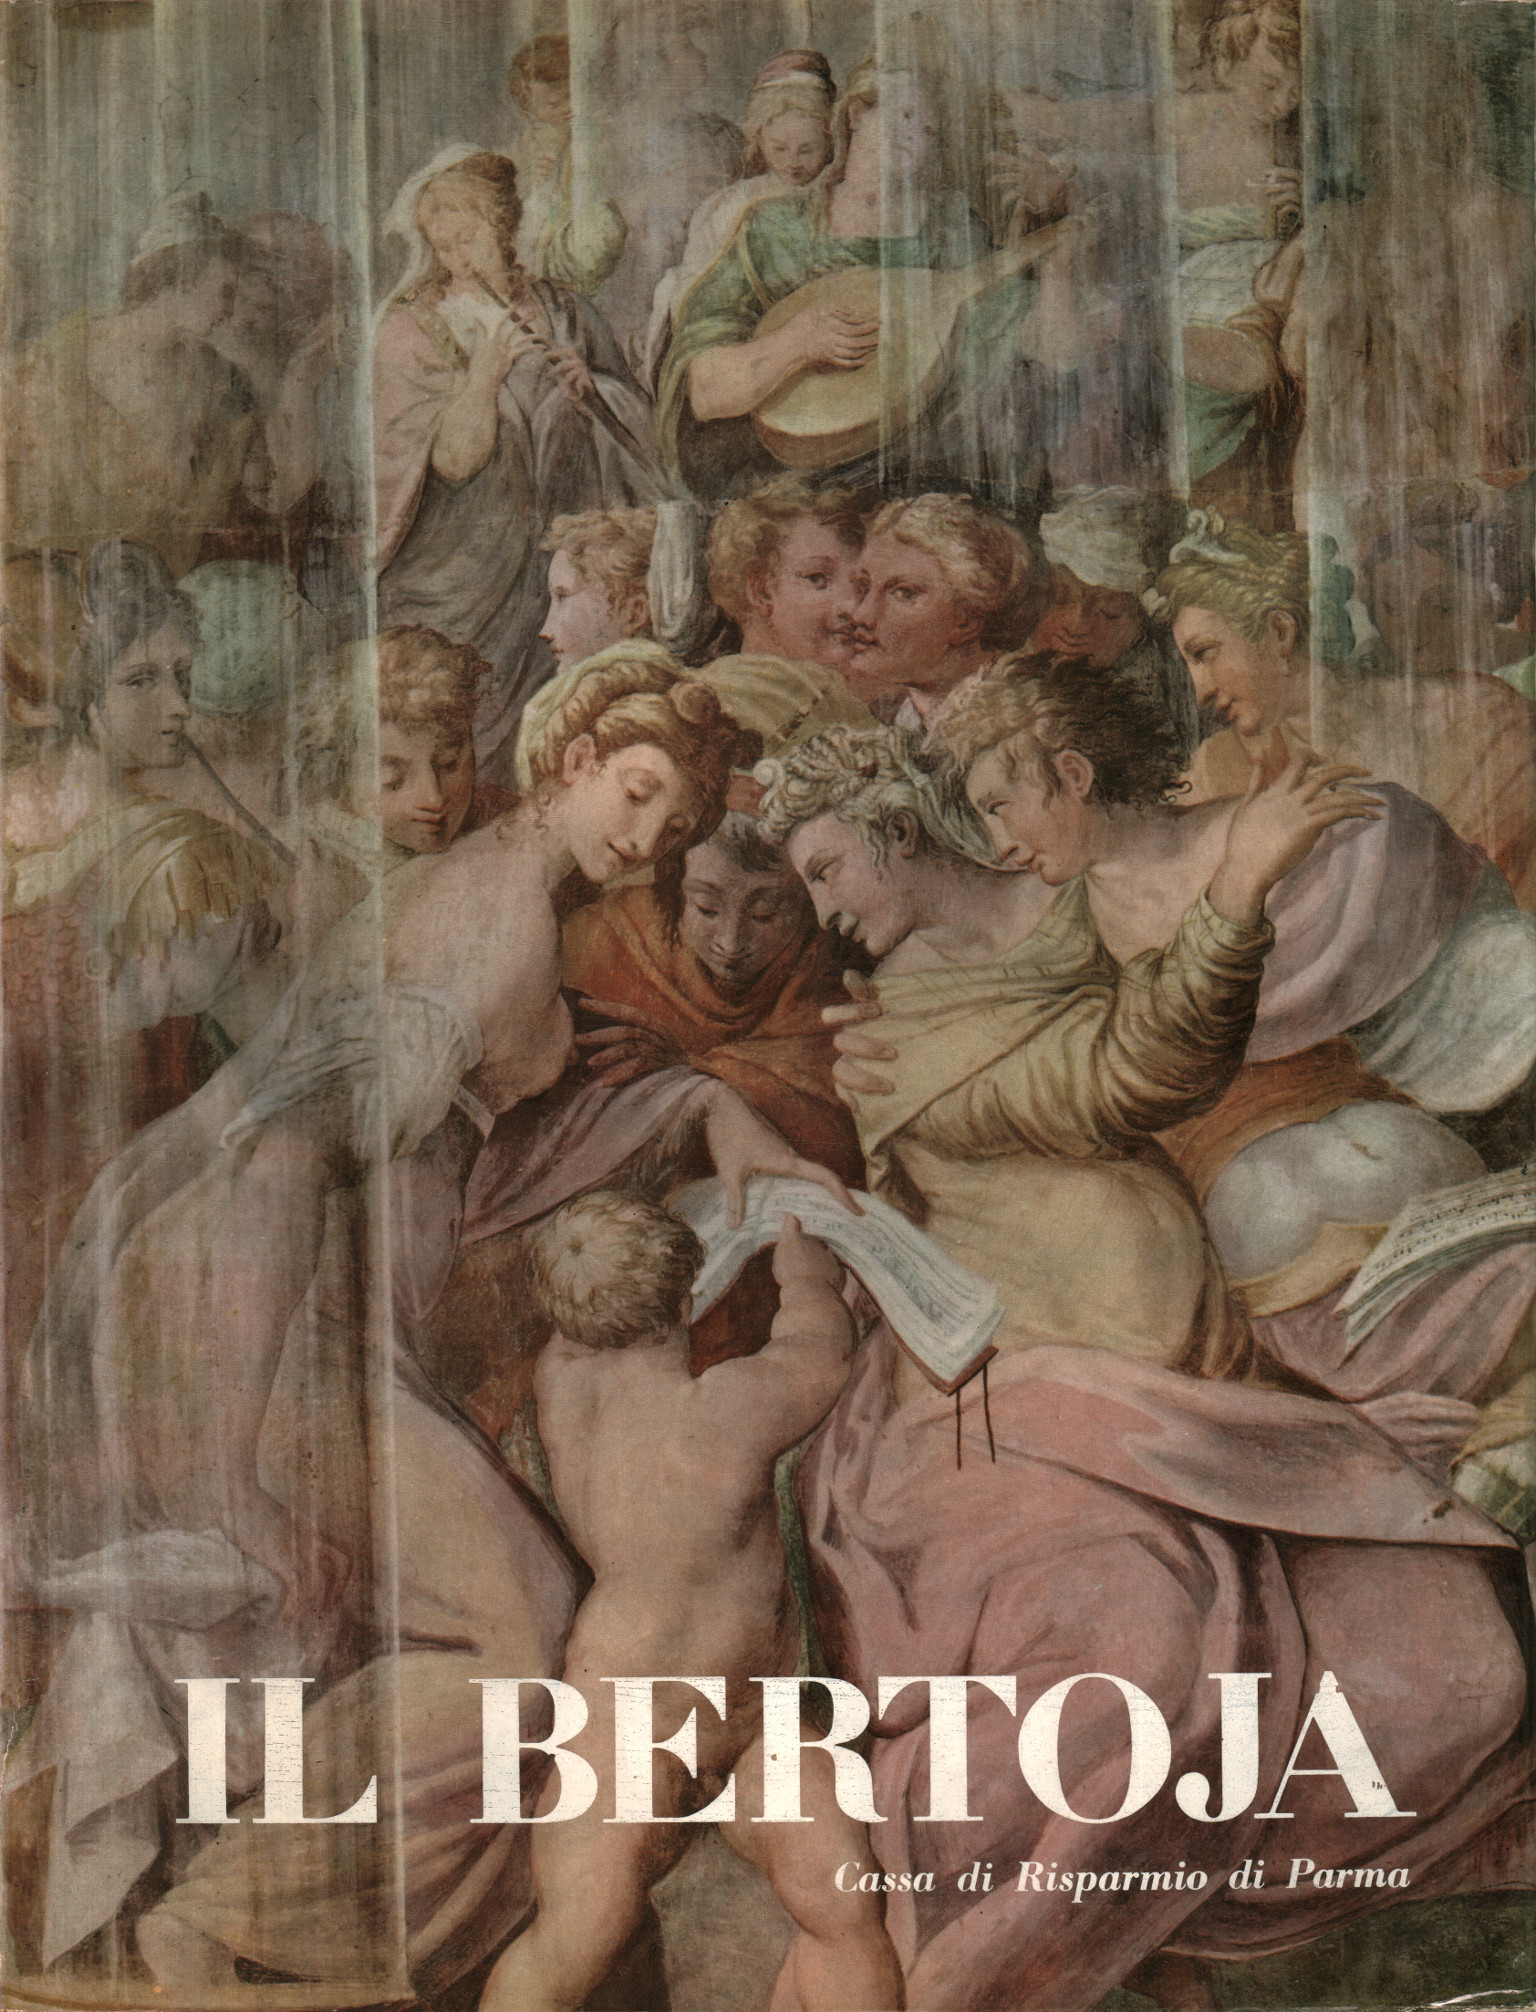 The Bertoja